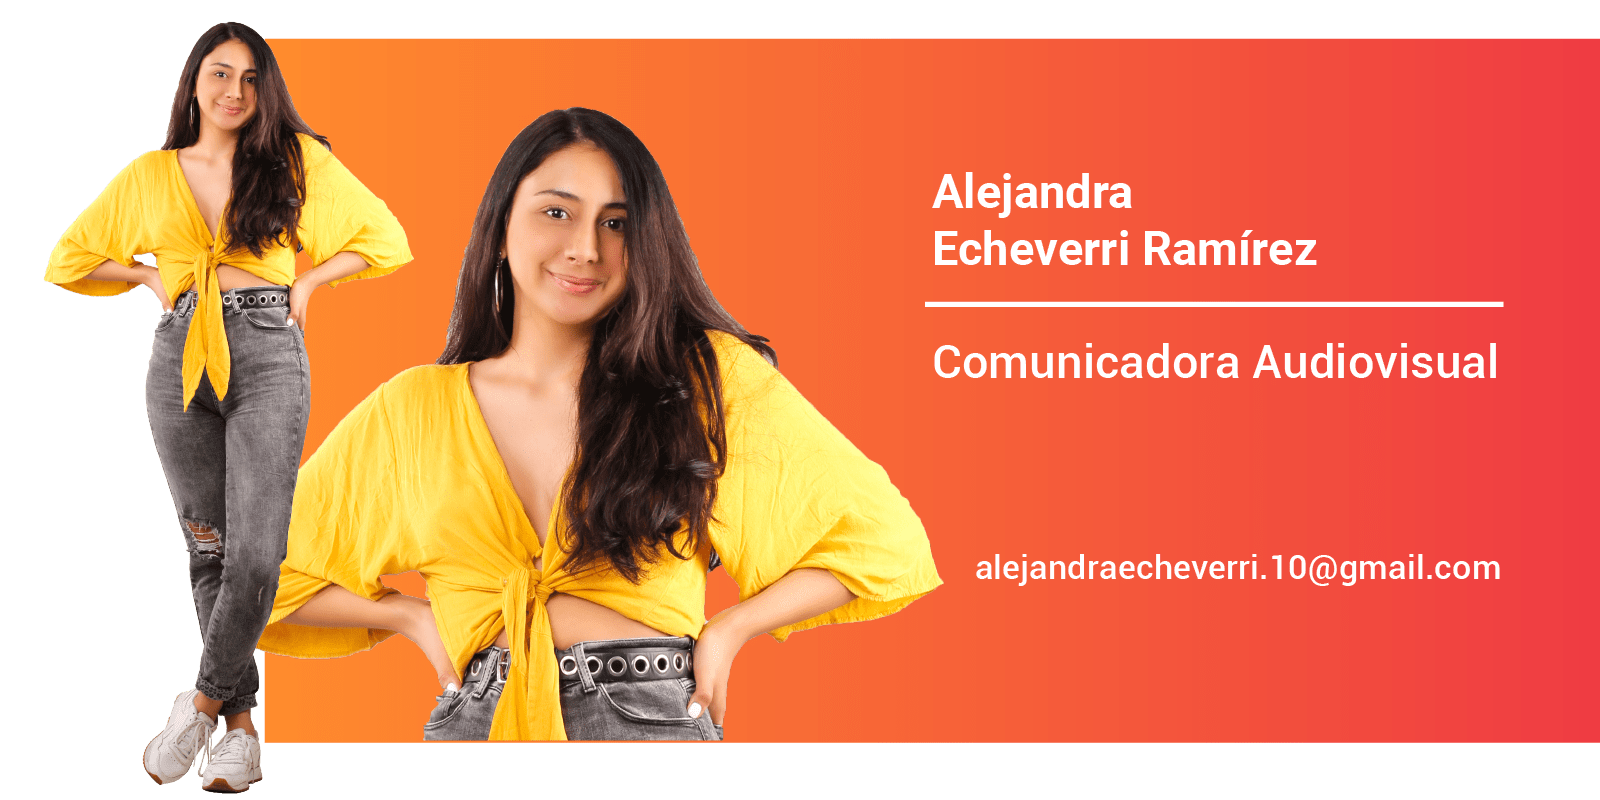 Alejandra Echeverri